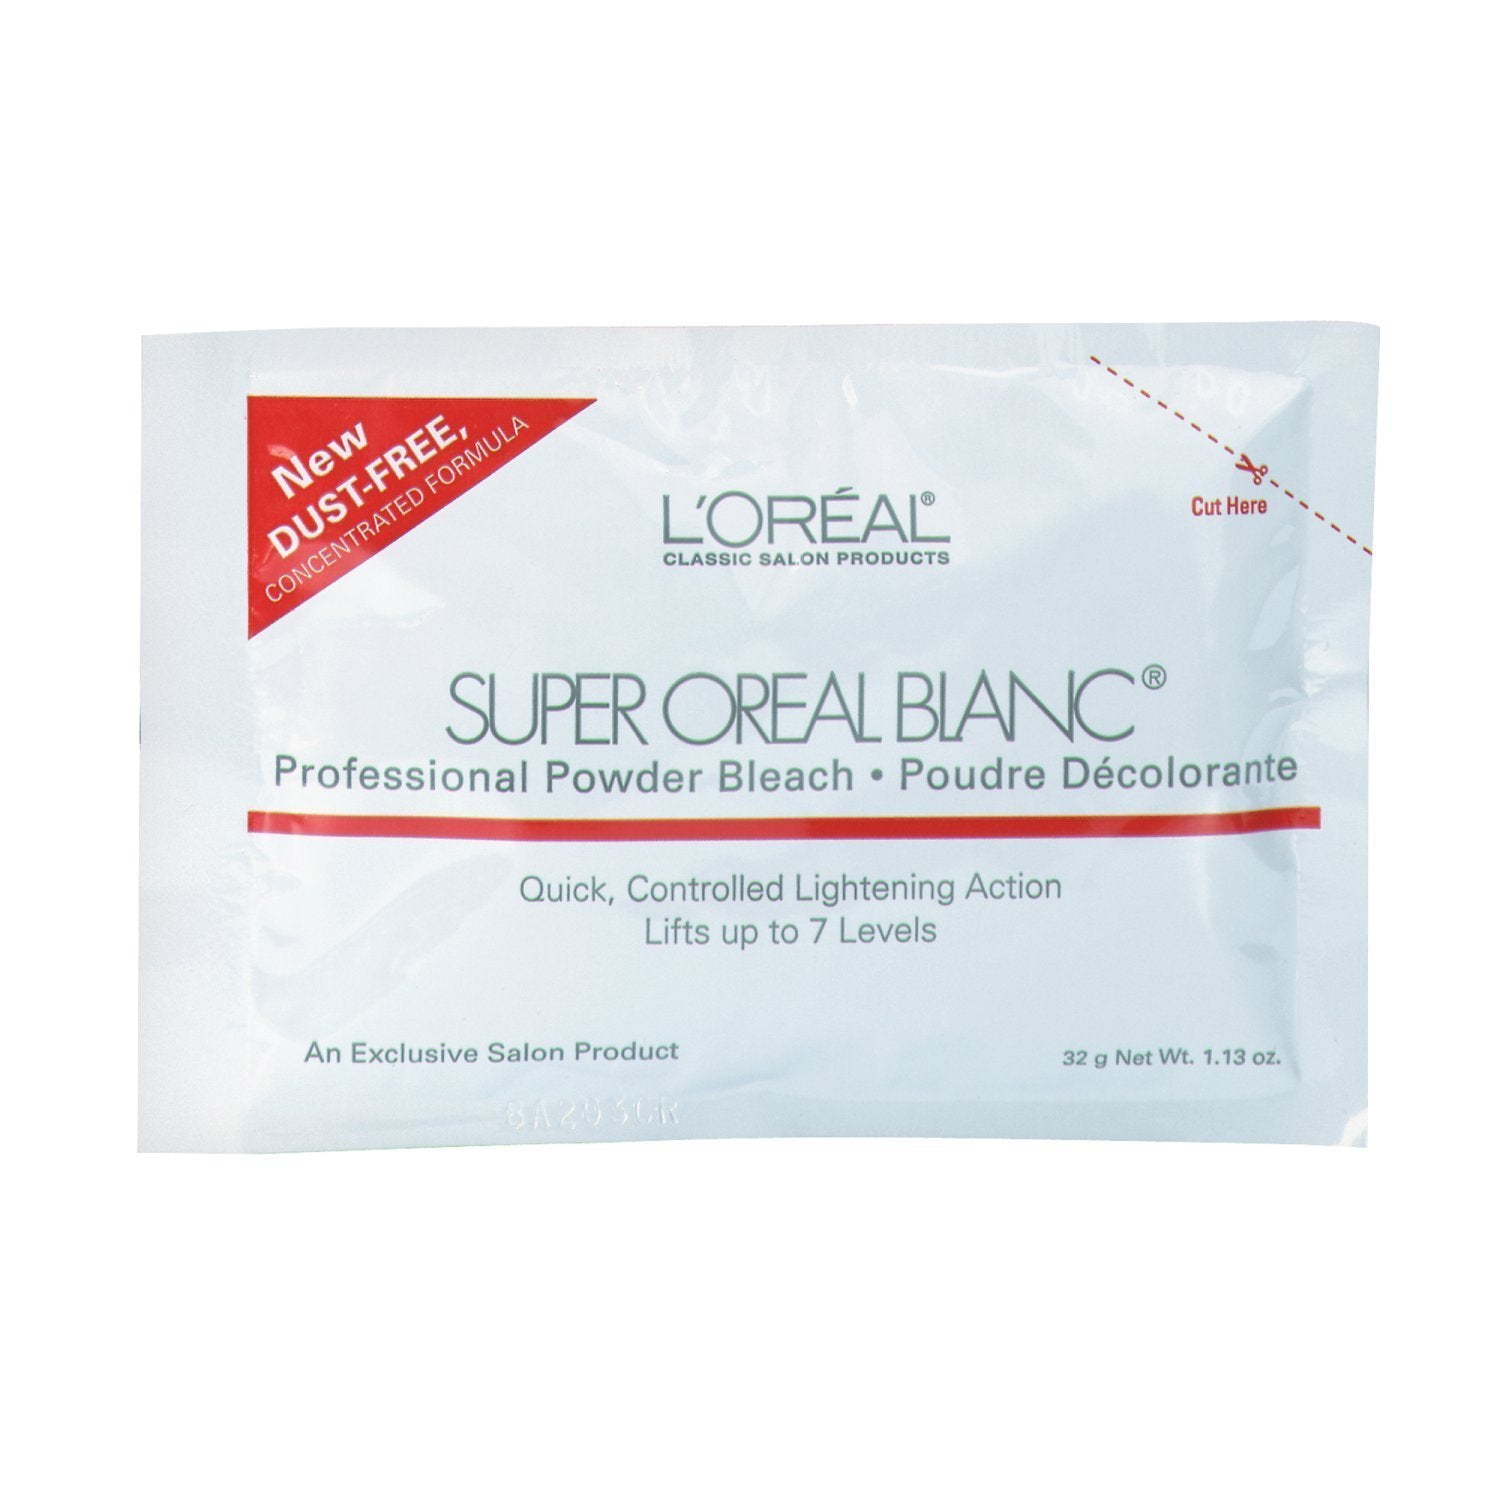 L'Oreal Super Oreal Blanc Professional Powder Bleach 1.13 oz